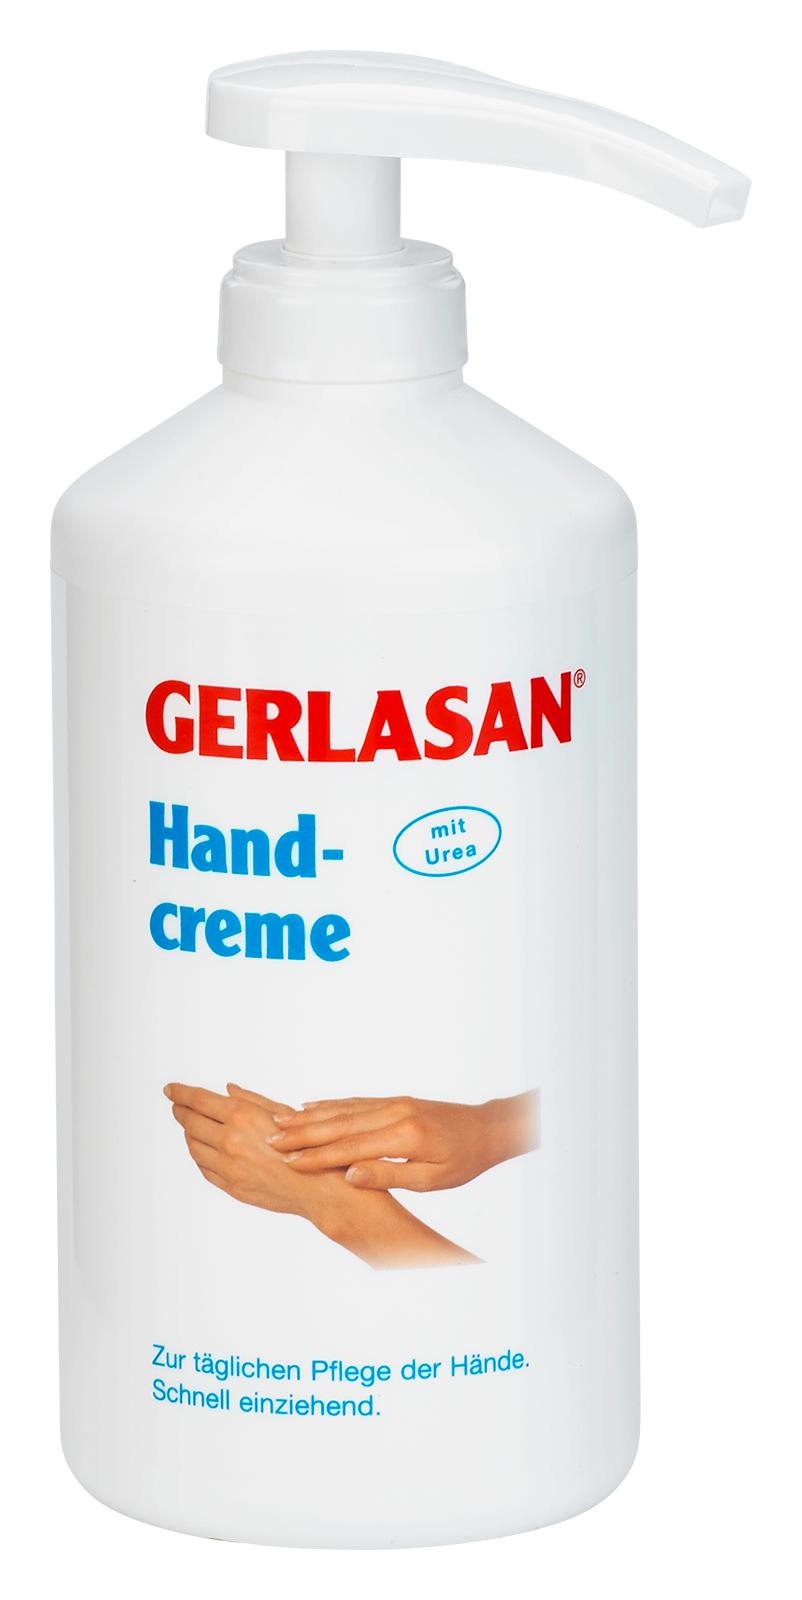 GERLASAN - Handcreme mit Urea 500 ml